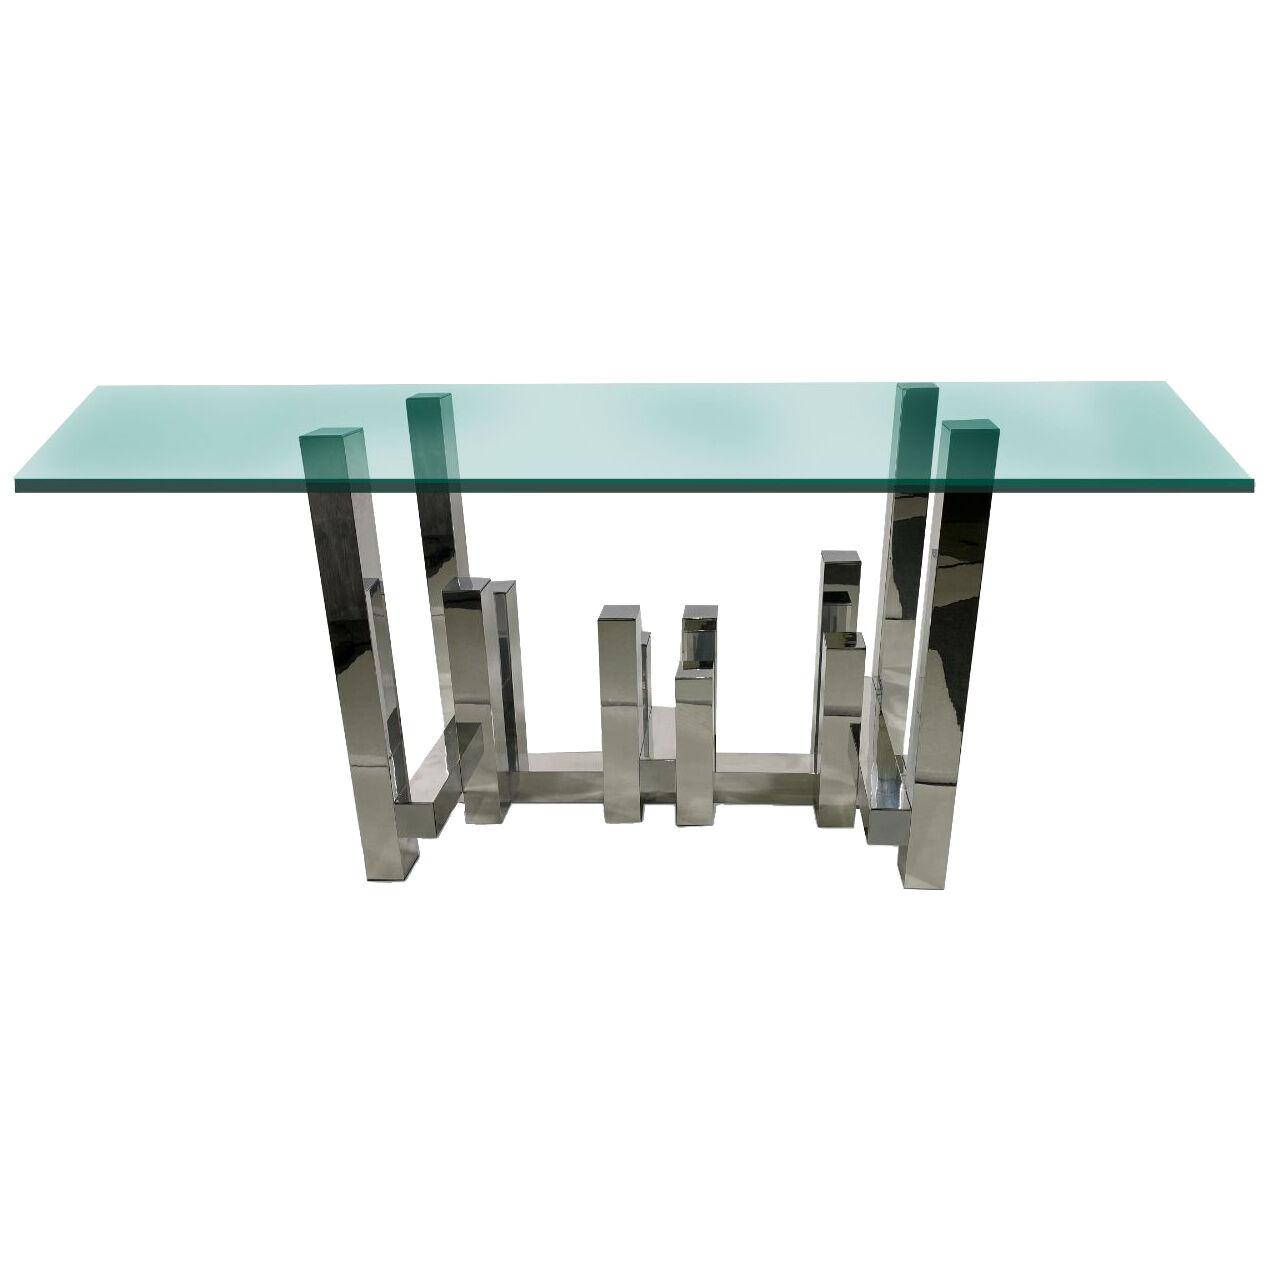 American Modern Chrome Dining Table, Console Table Base, Paul Mayen For Habitat